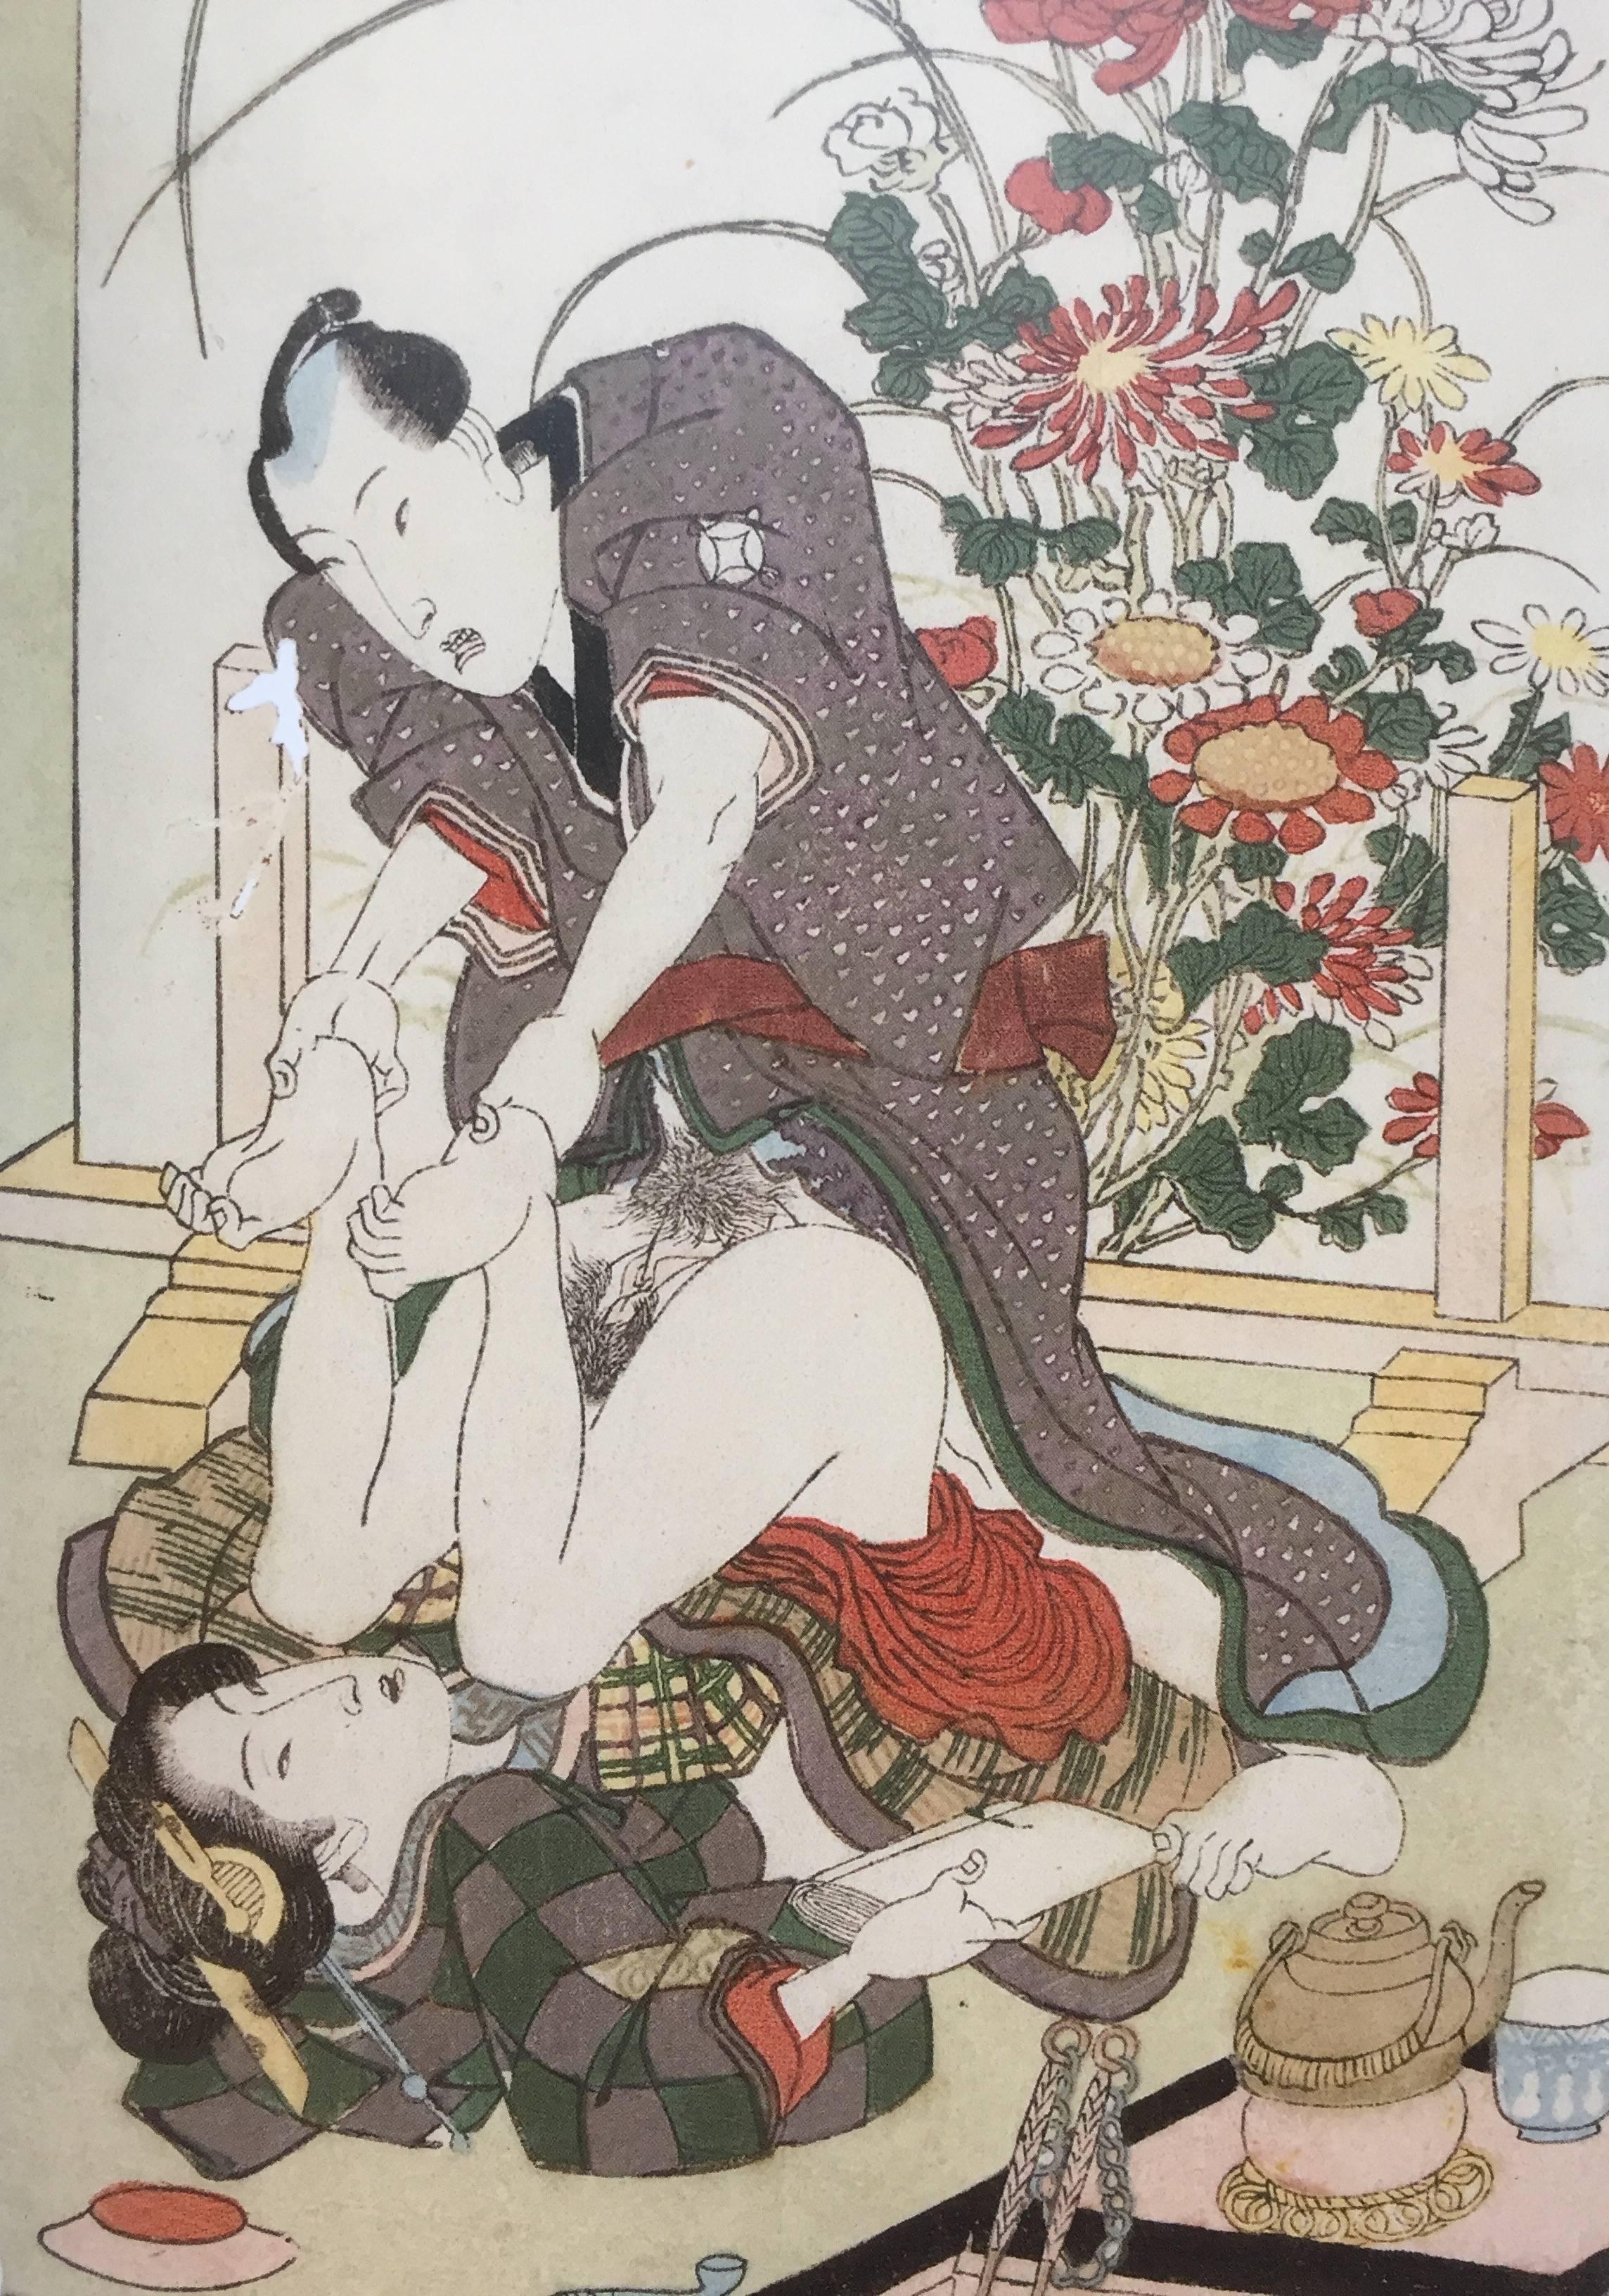 Paper Araki Meets Hokusai - Nobuyoshi Araki, Hokusai - 1st Edition, Kehrer, 2008 For Sale